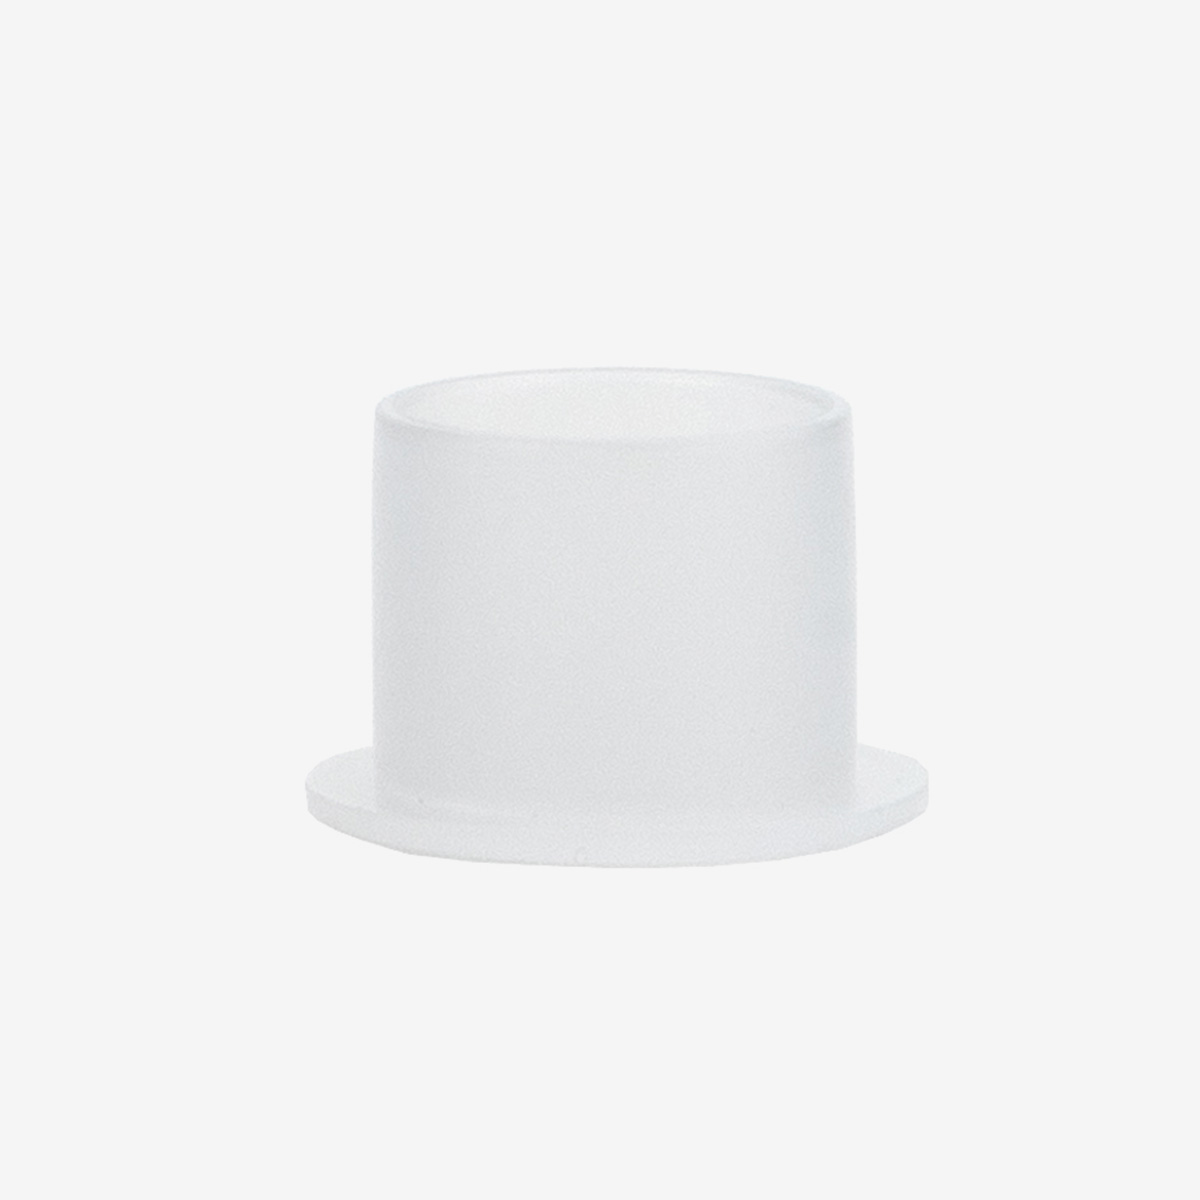 White oxygen fitting cap on white background